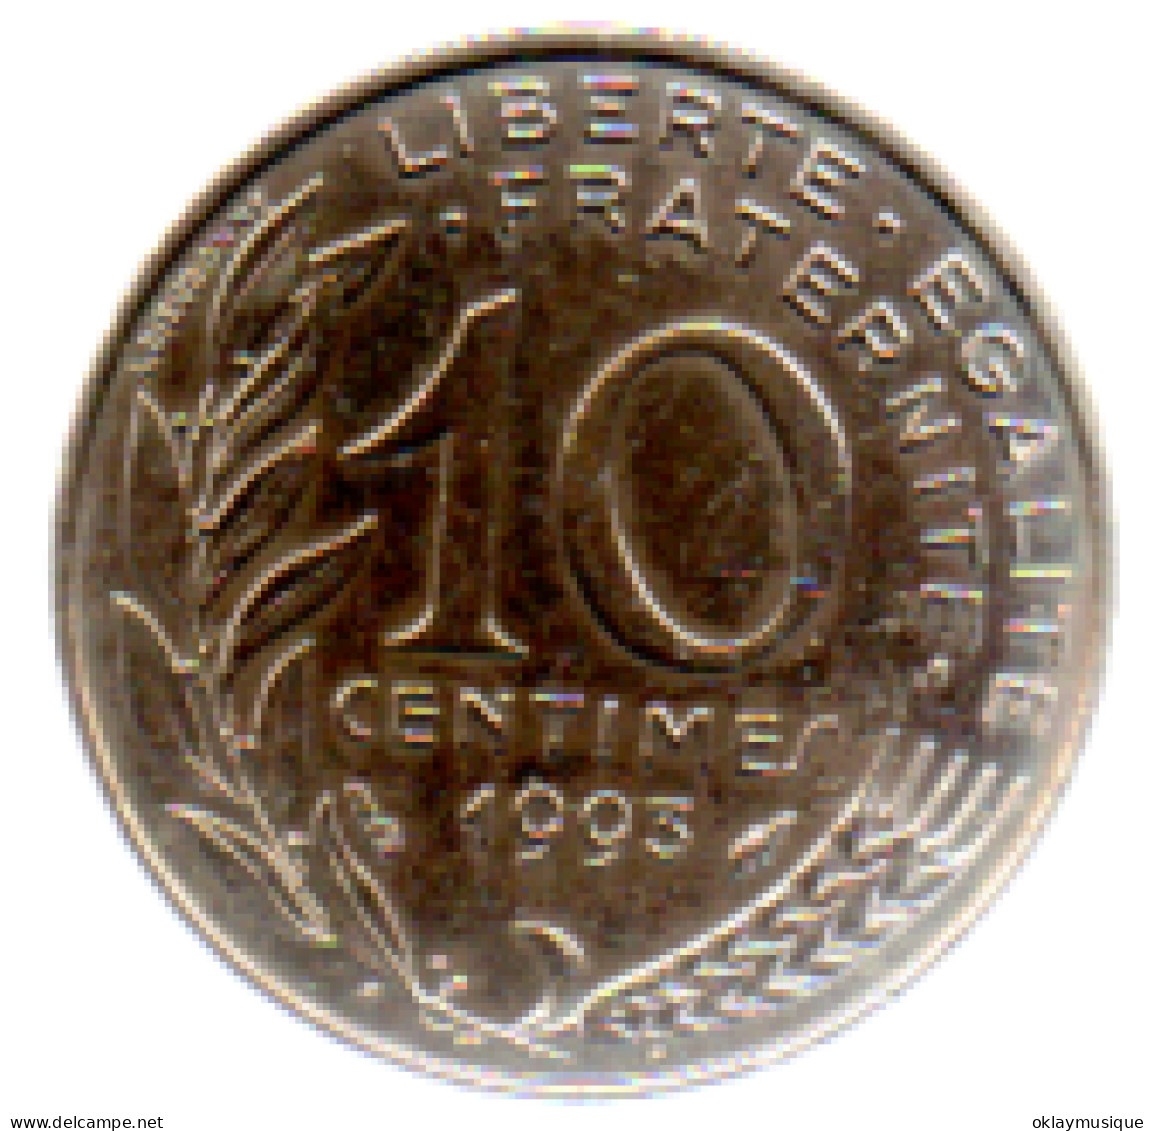 10 Centimes 1993 - 10 Centimes